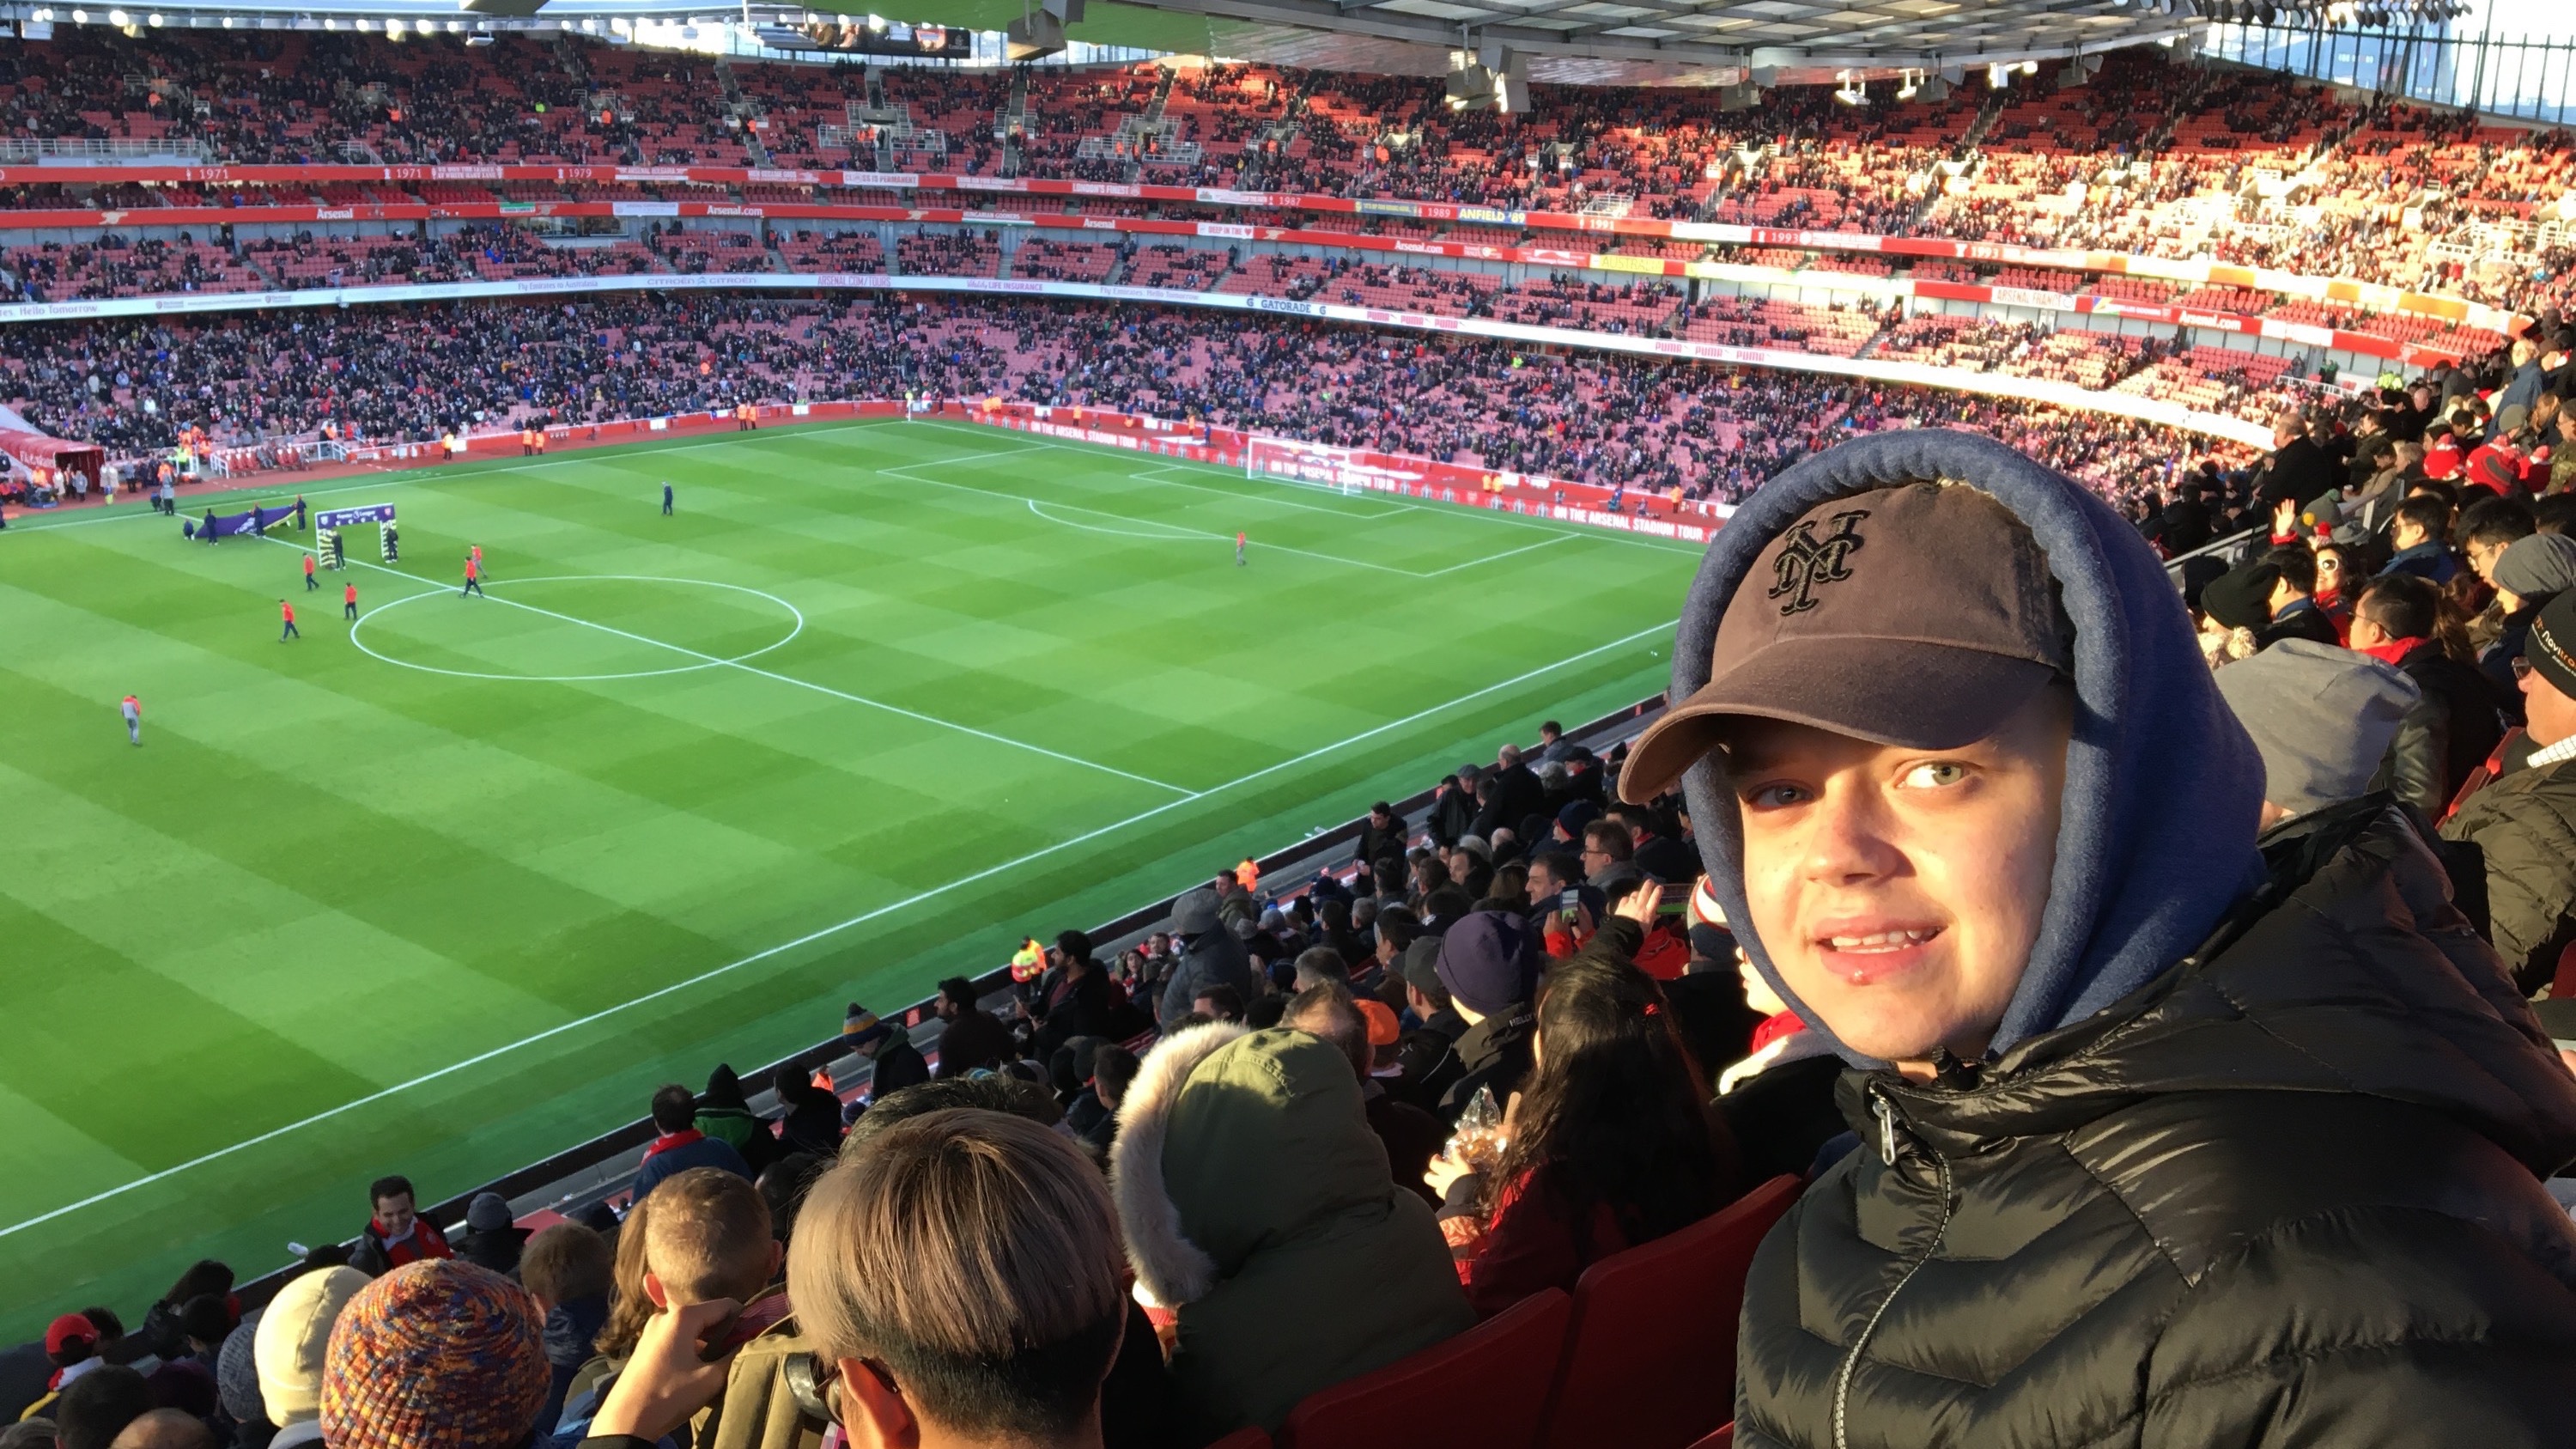 Sebastian Prawdzik enjoys the view from his seat at Arsenal's Boxing Day match